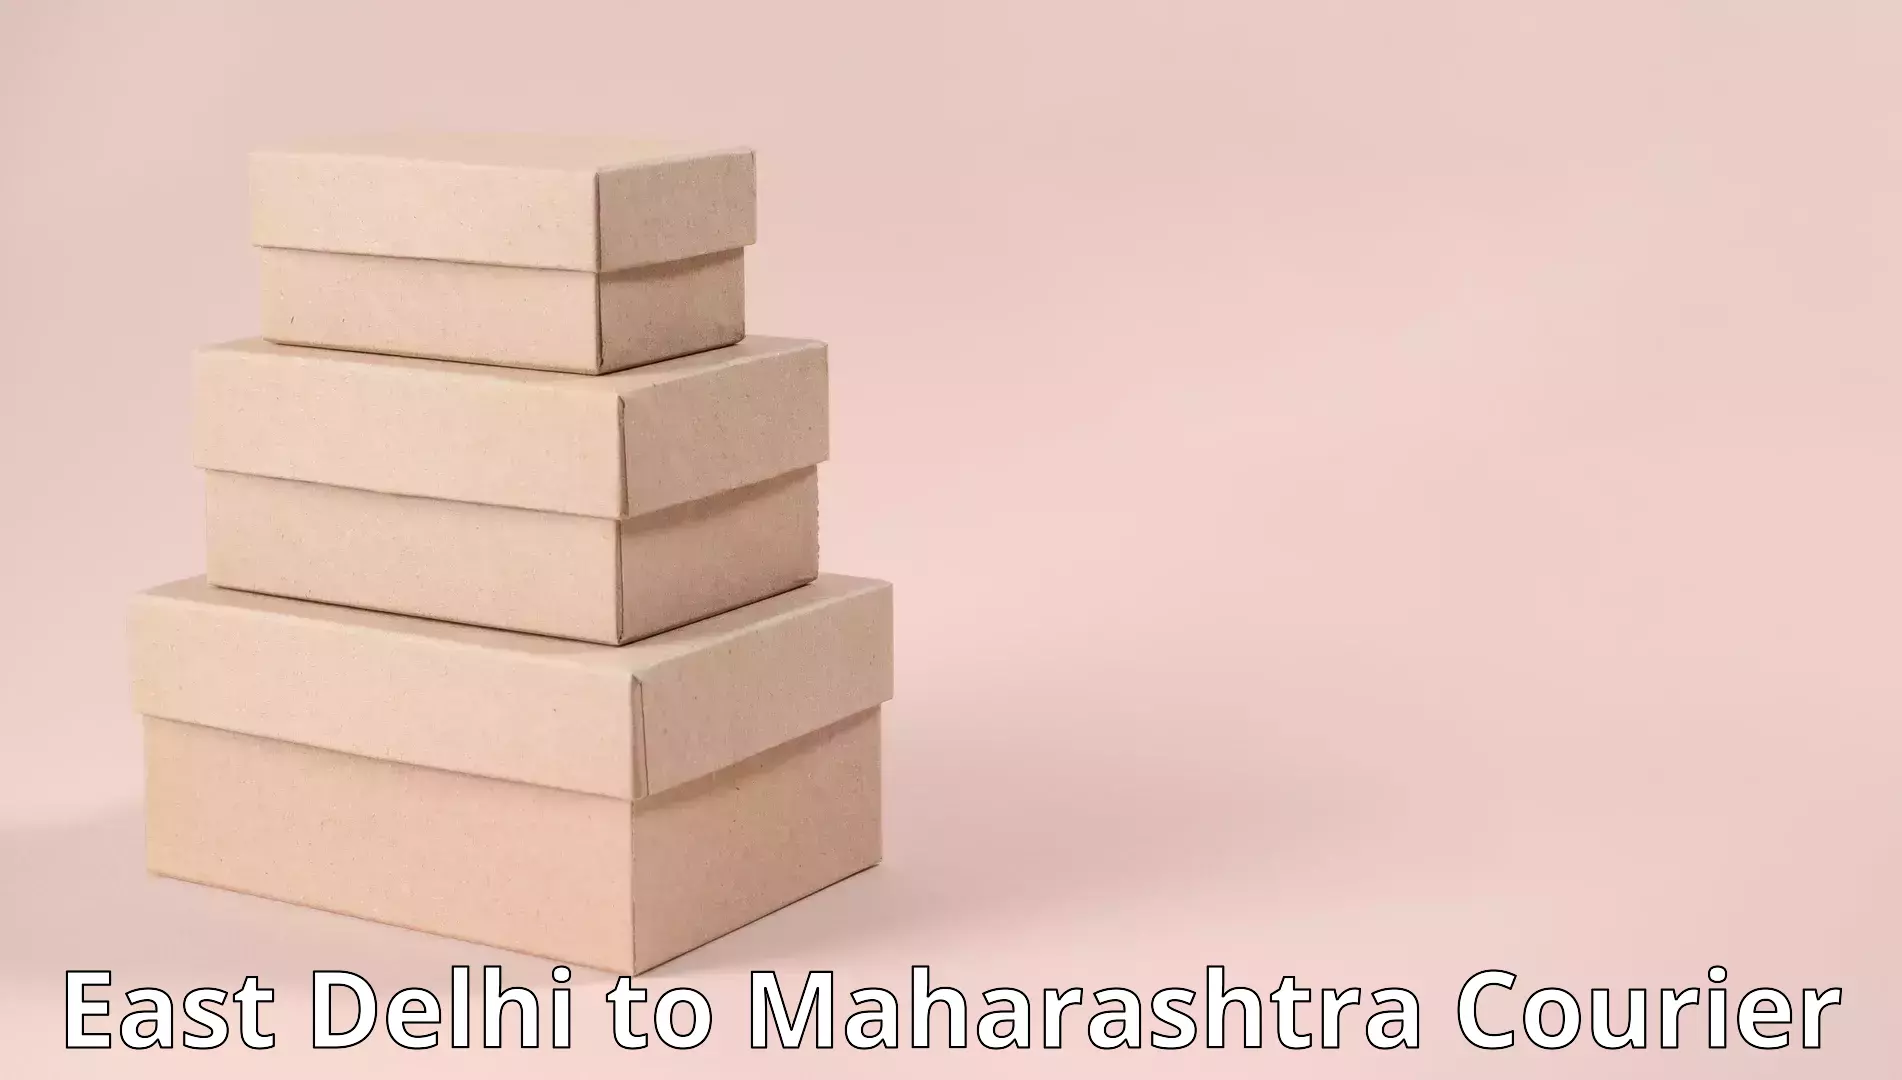 Furniture delivery service East Delhi to Maharashtra